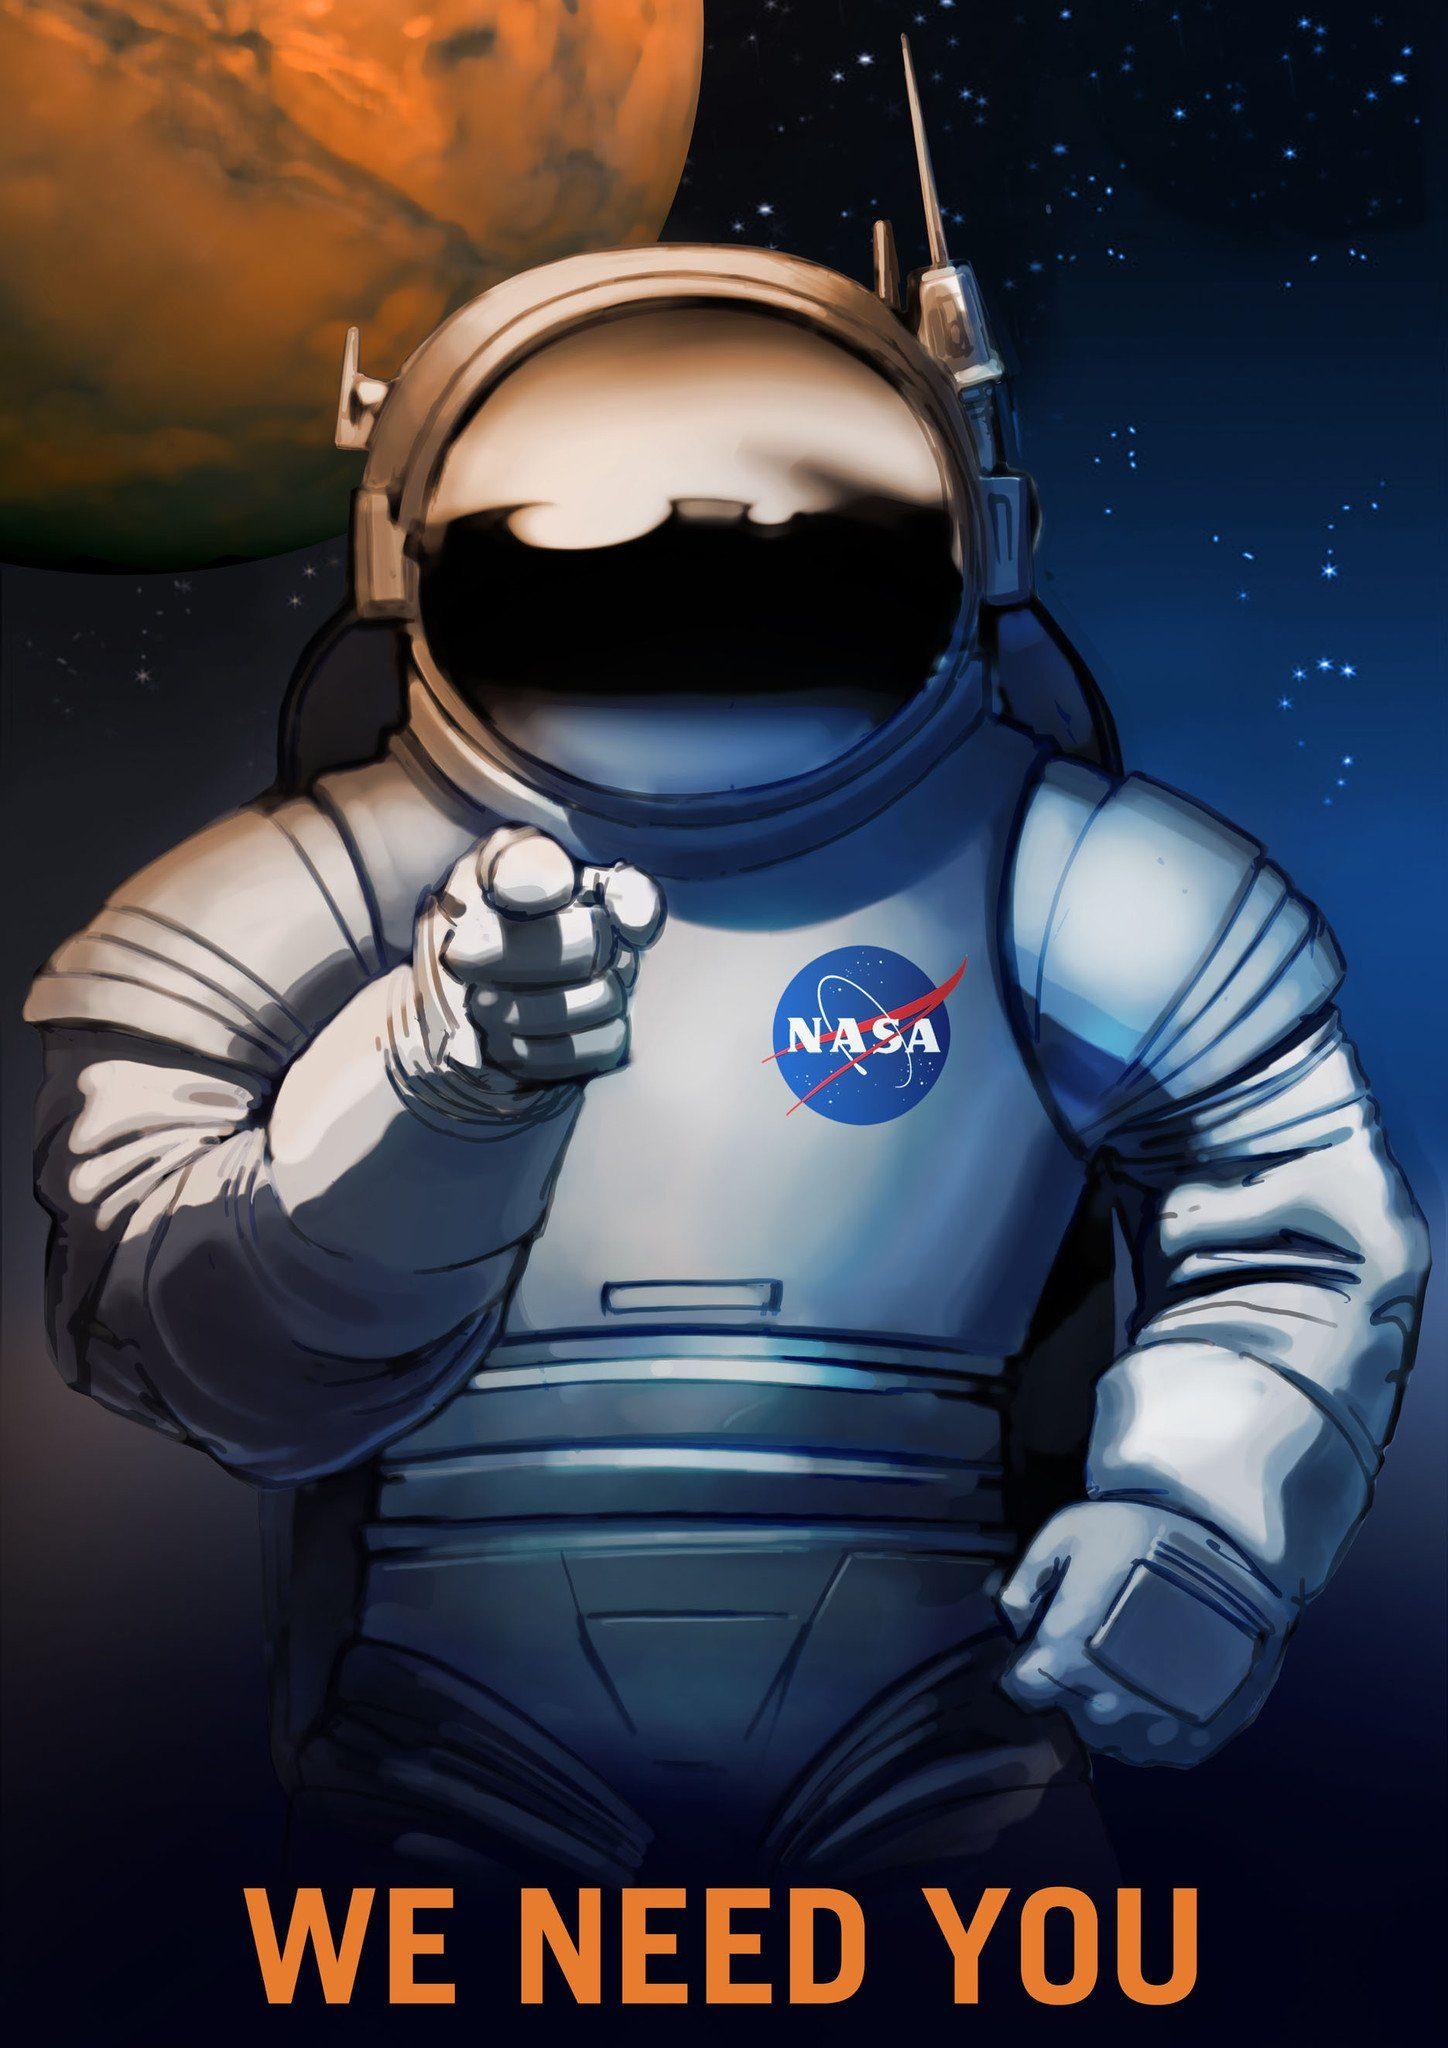 NASA RECRUITMENT POSTER: 'We Need You' Space Print - Pimlico Prints